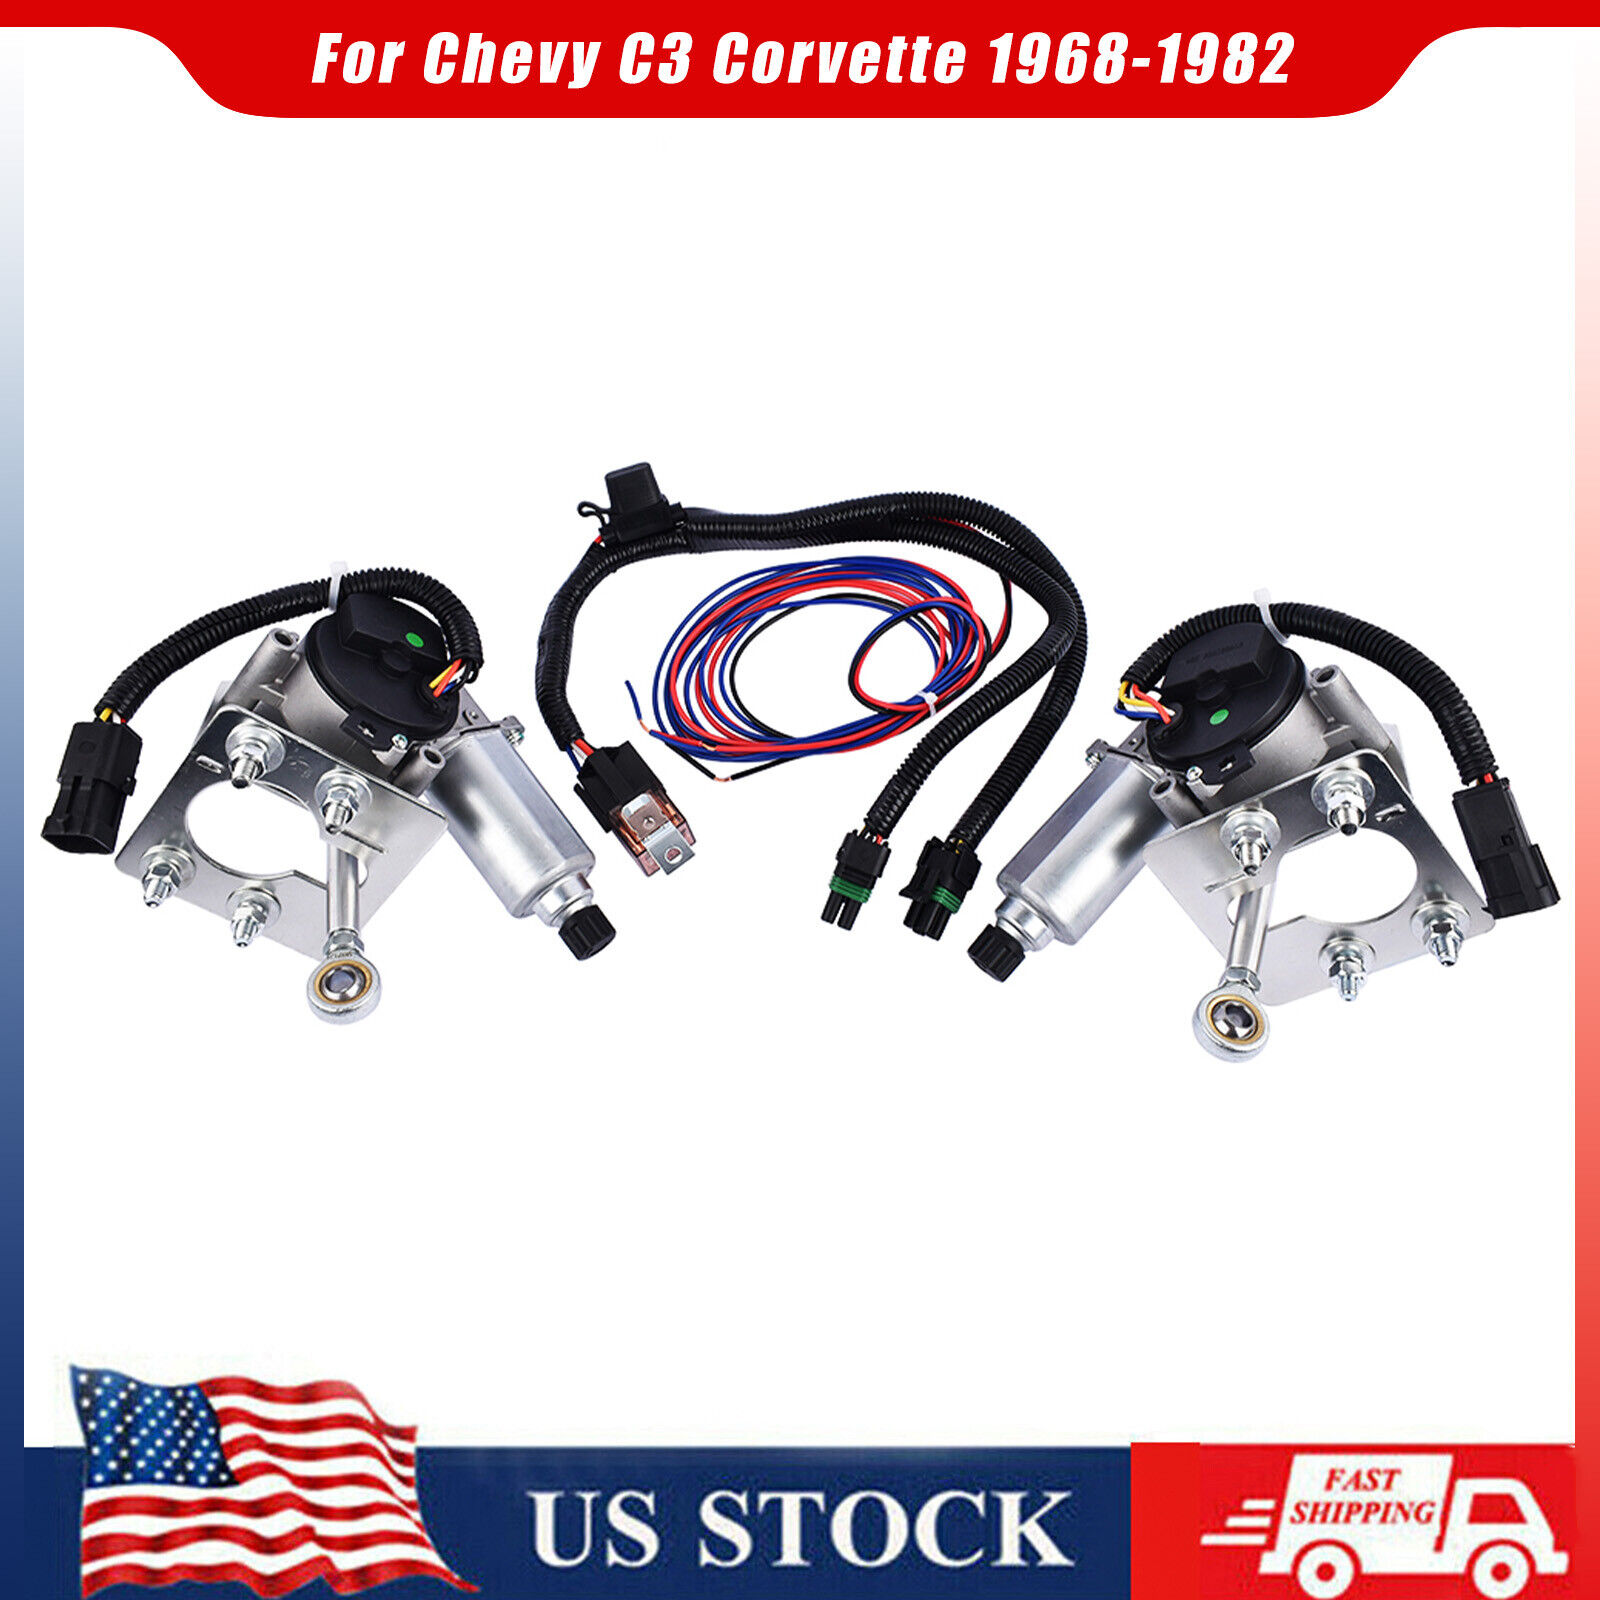 Electric Headlight Motor Conversion Kit Upgrade for Chevy C3 Corvette 1968-1982